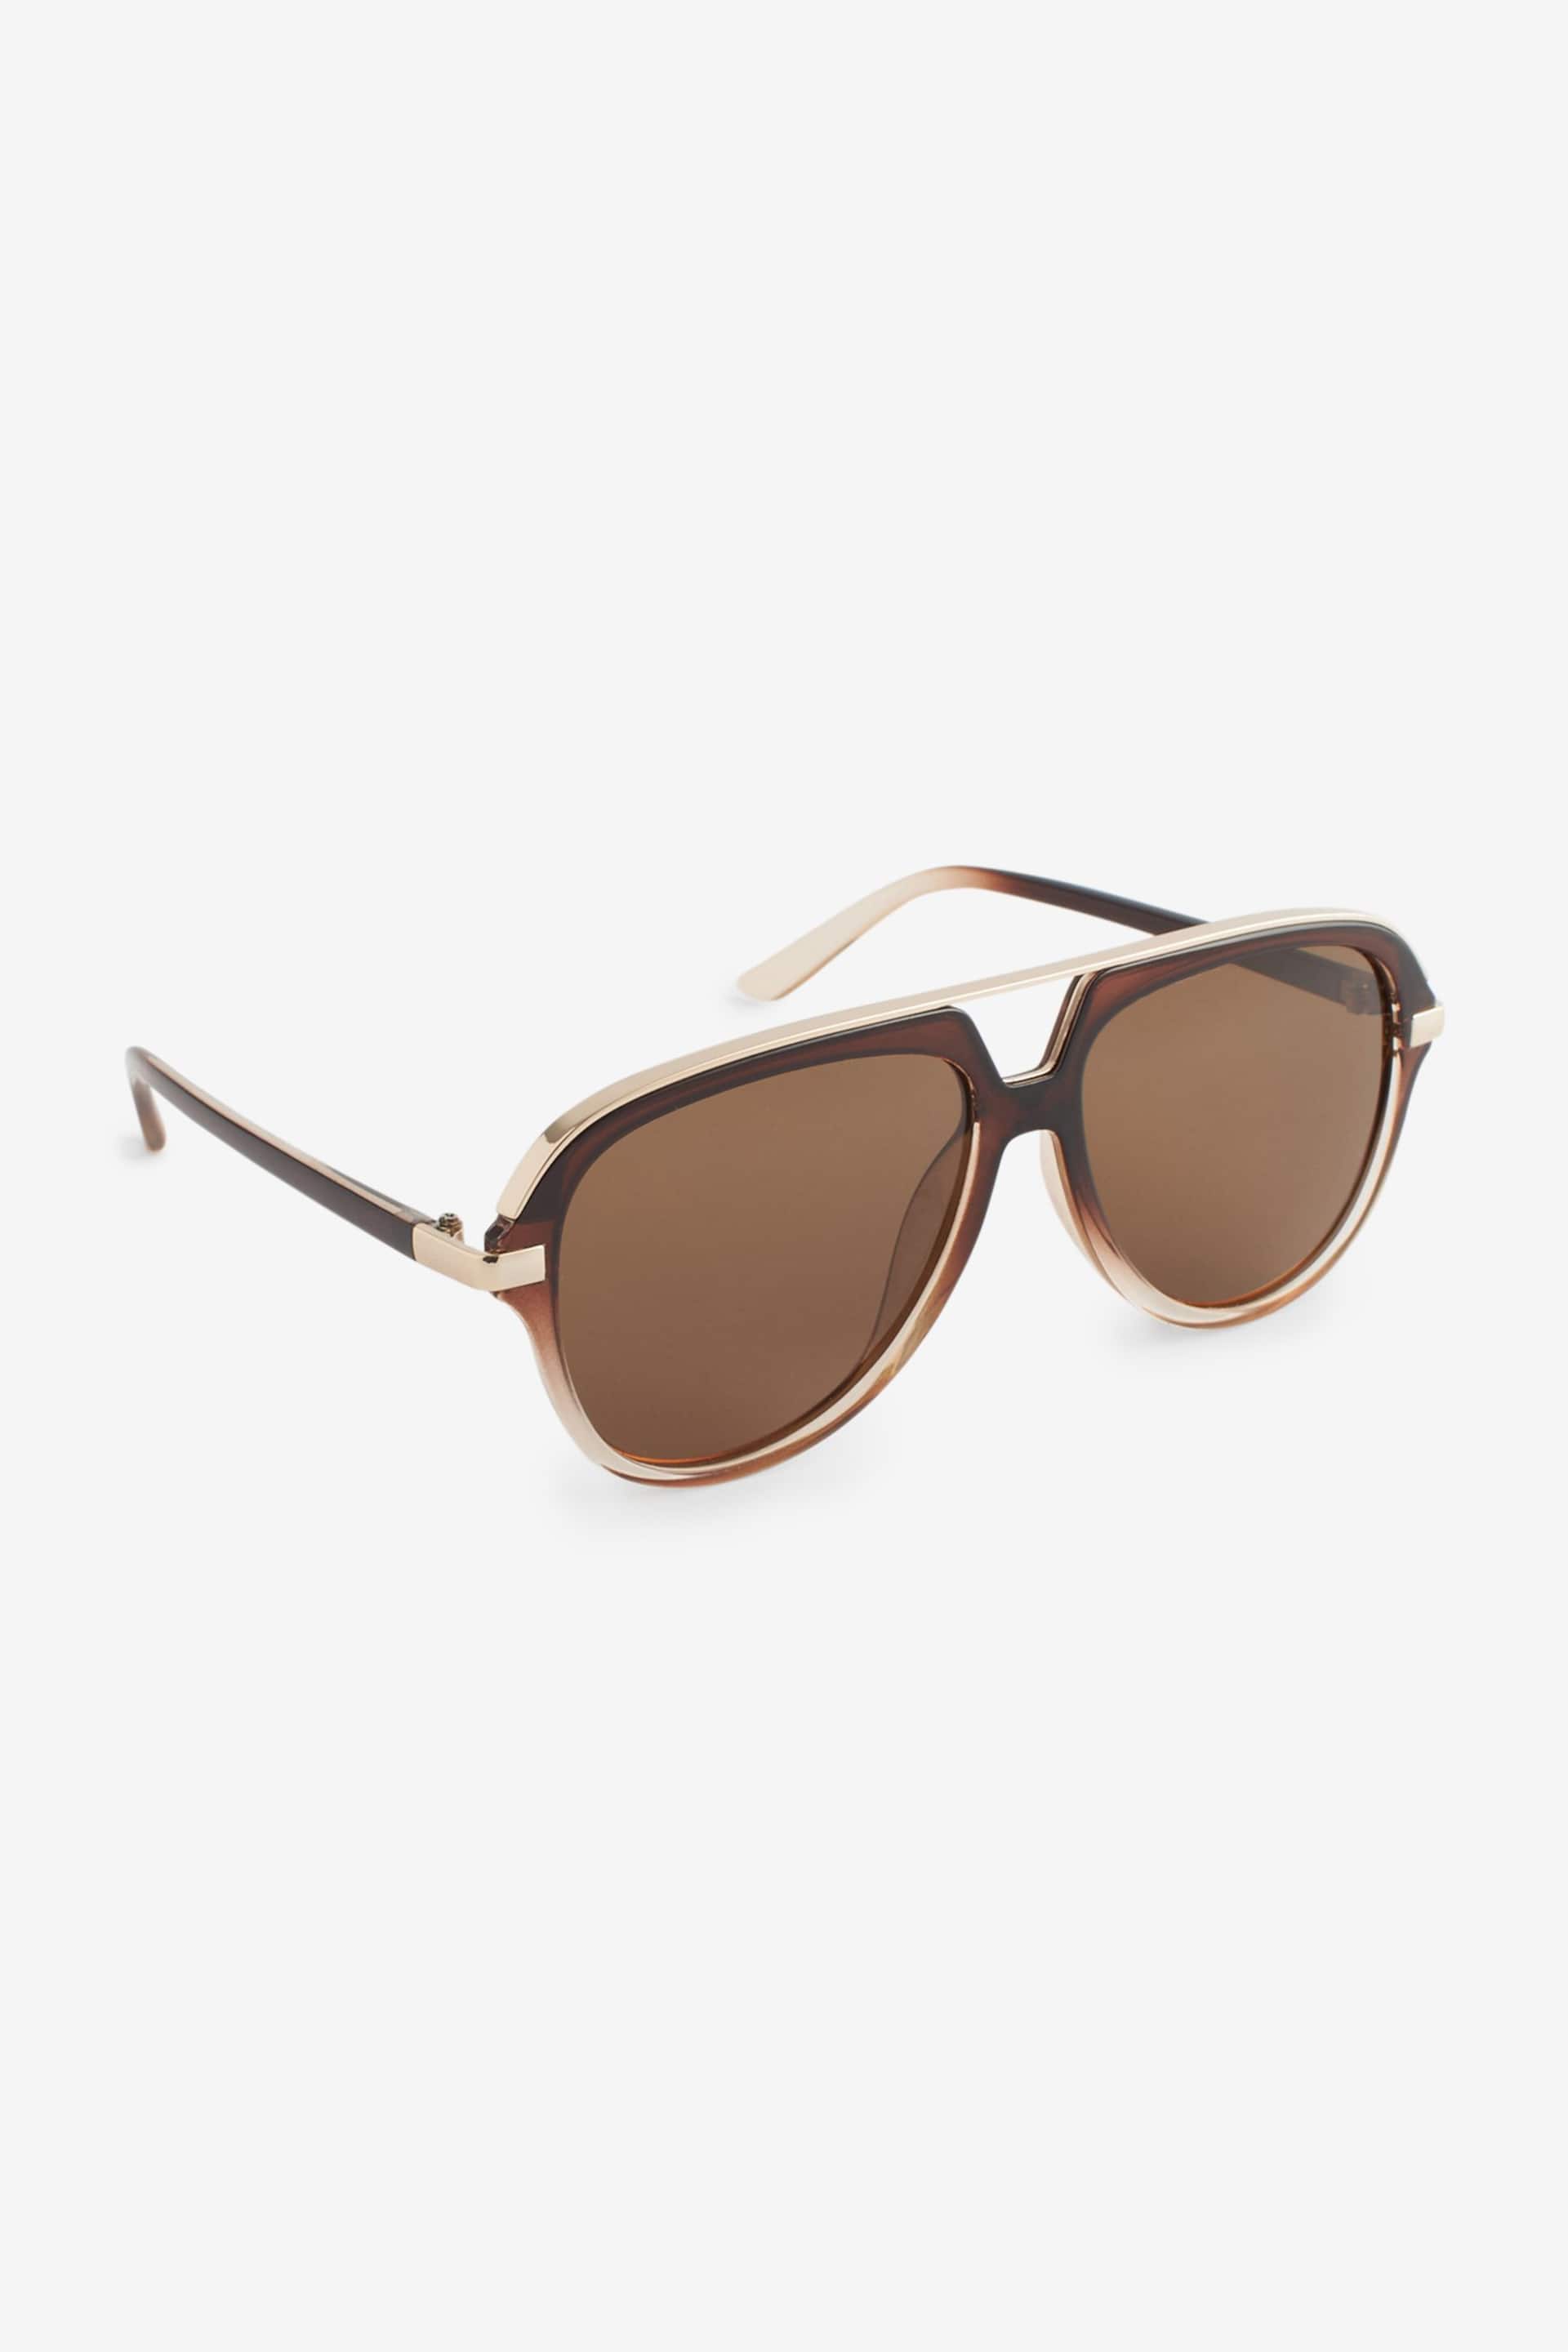 Brown Polarized Plastic Metal Aviator Sunglasses - Image 4 of 7